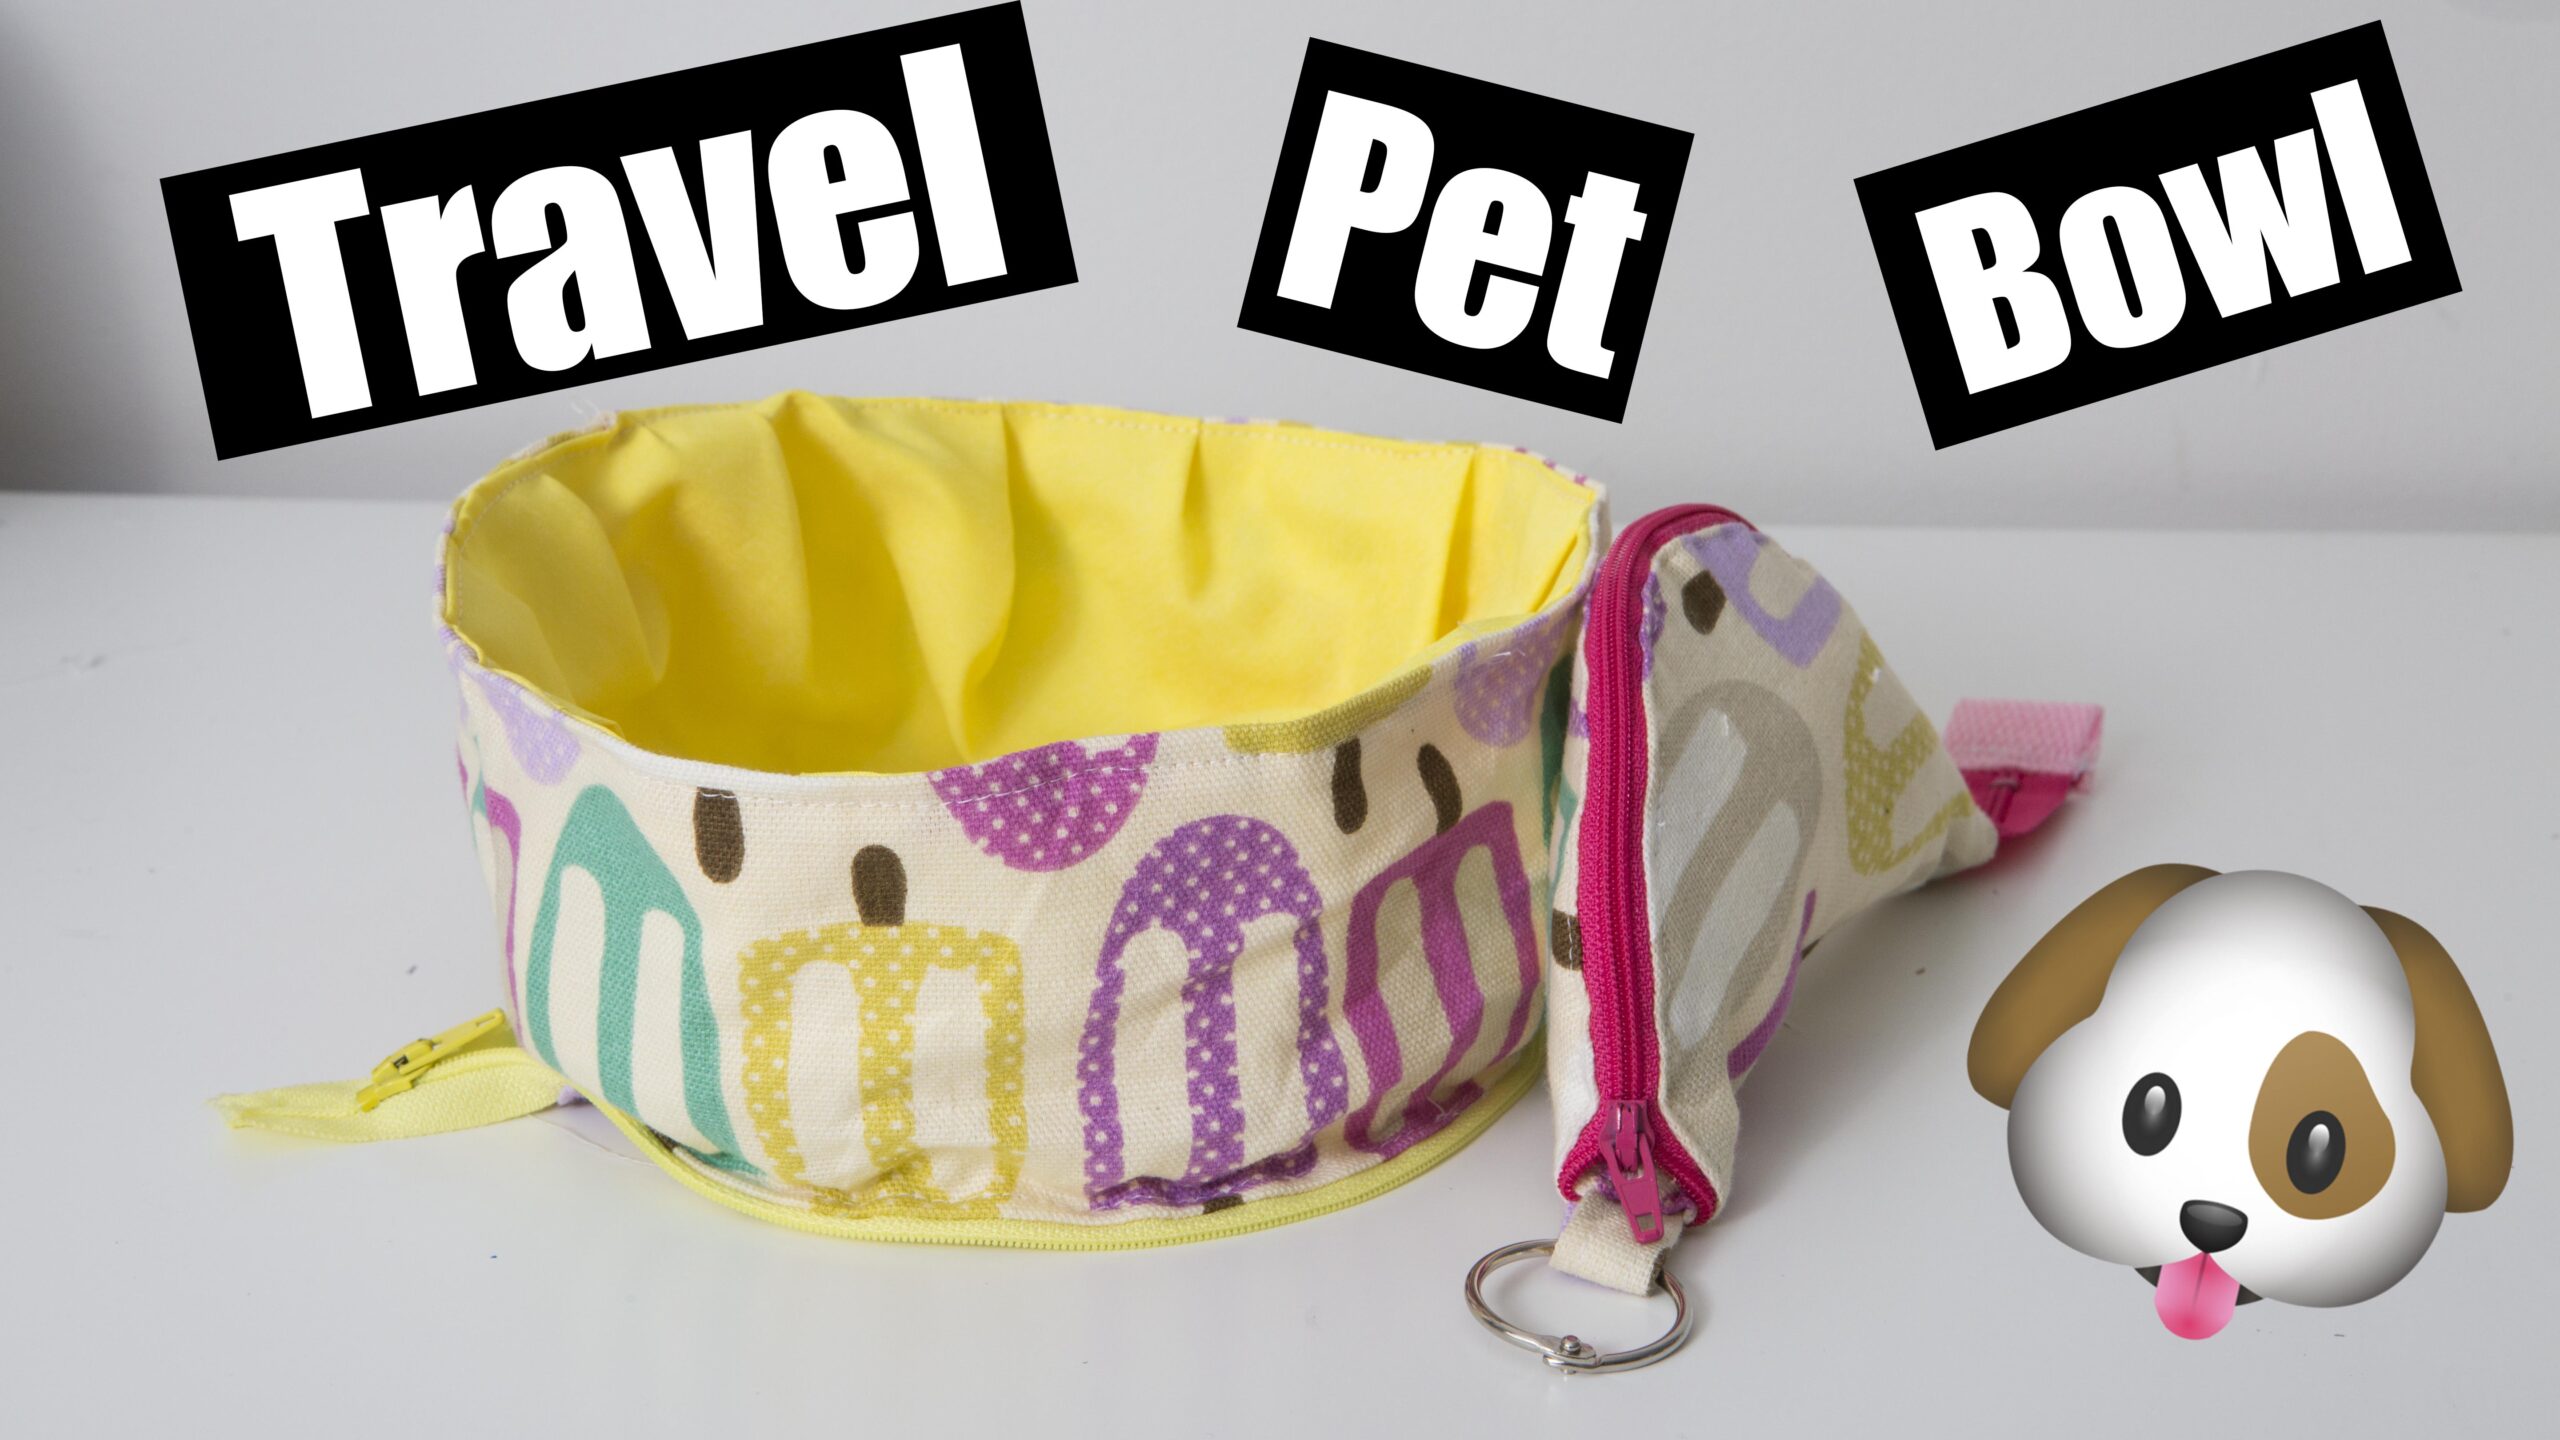 Travel Pet Bowl